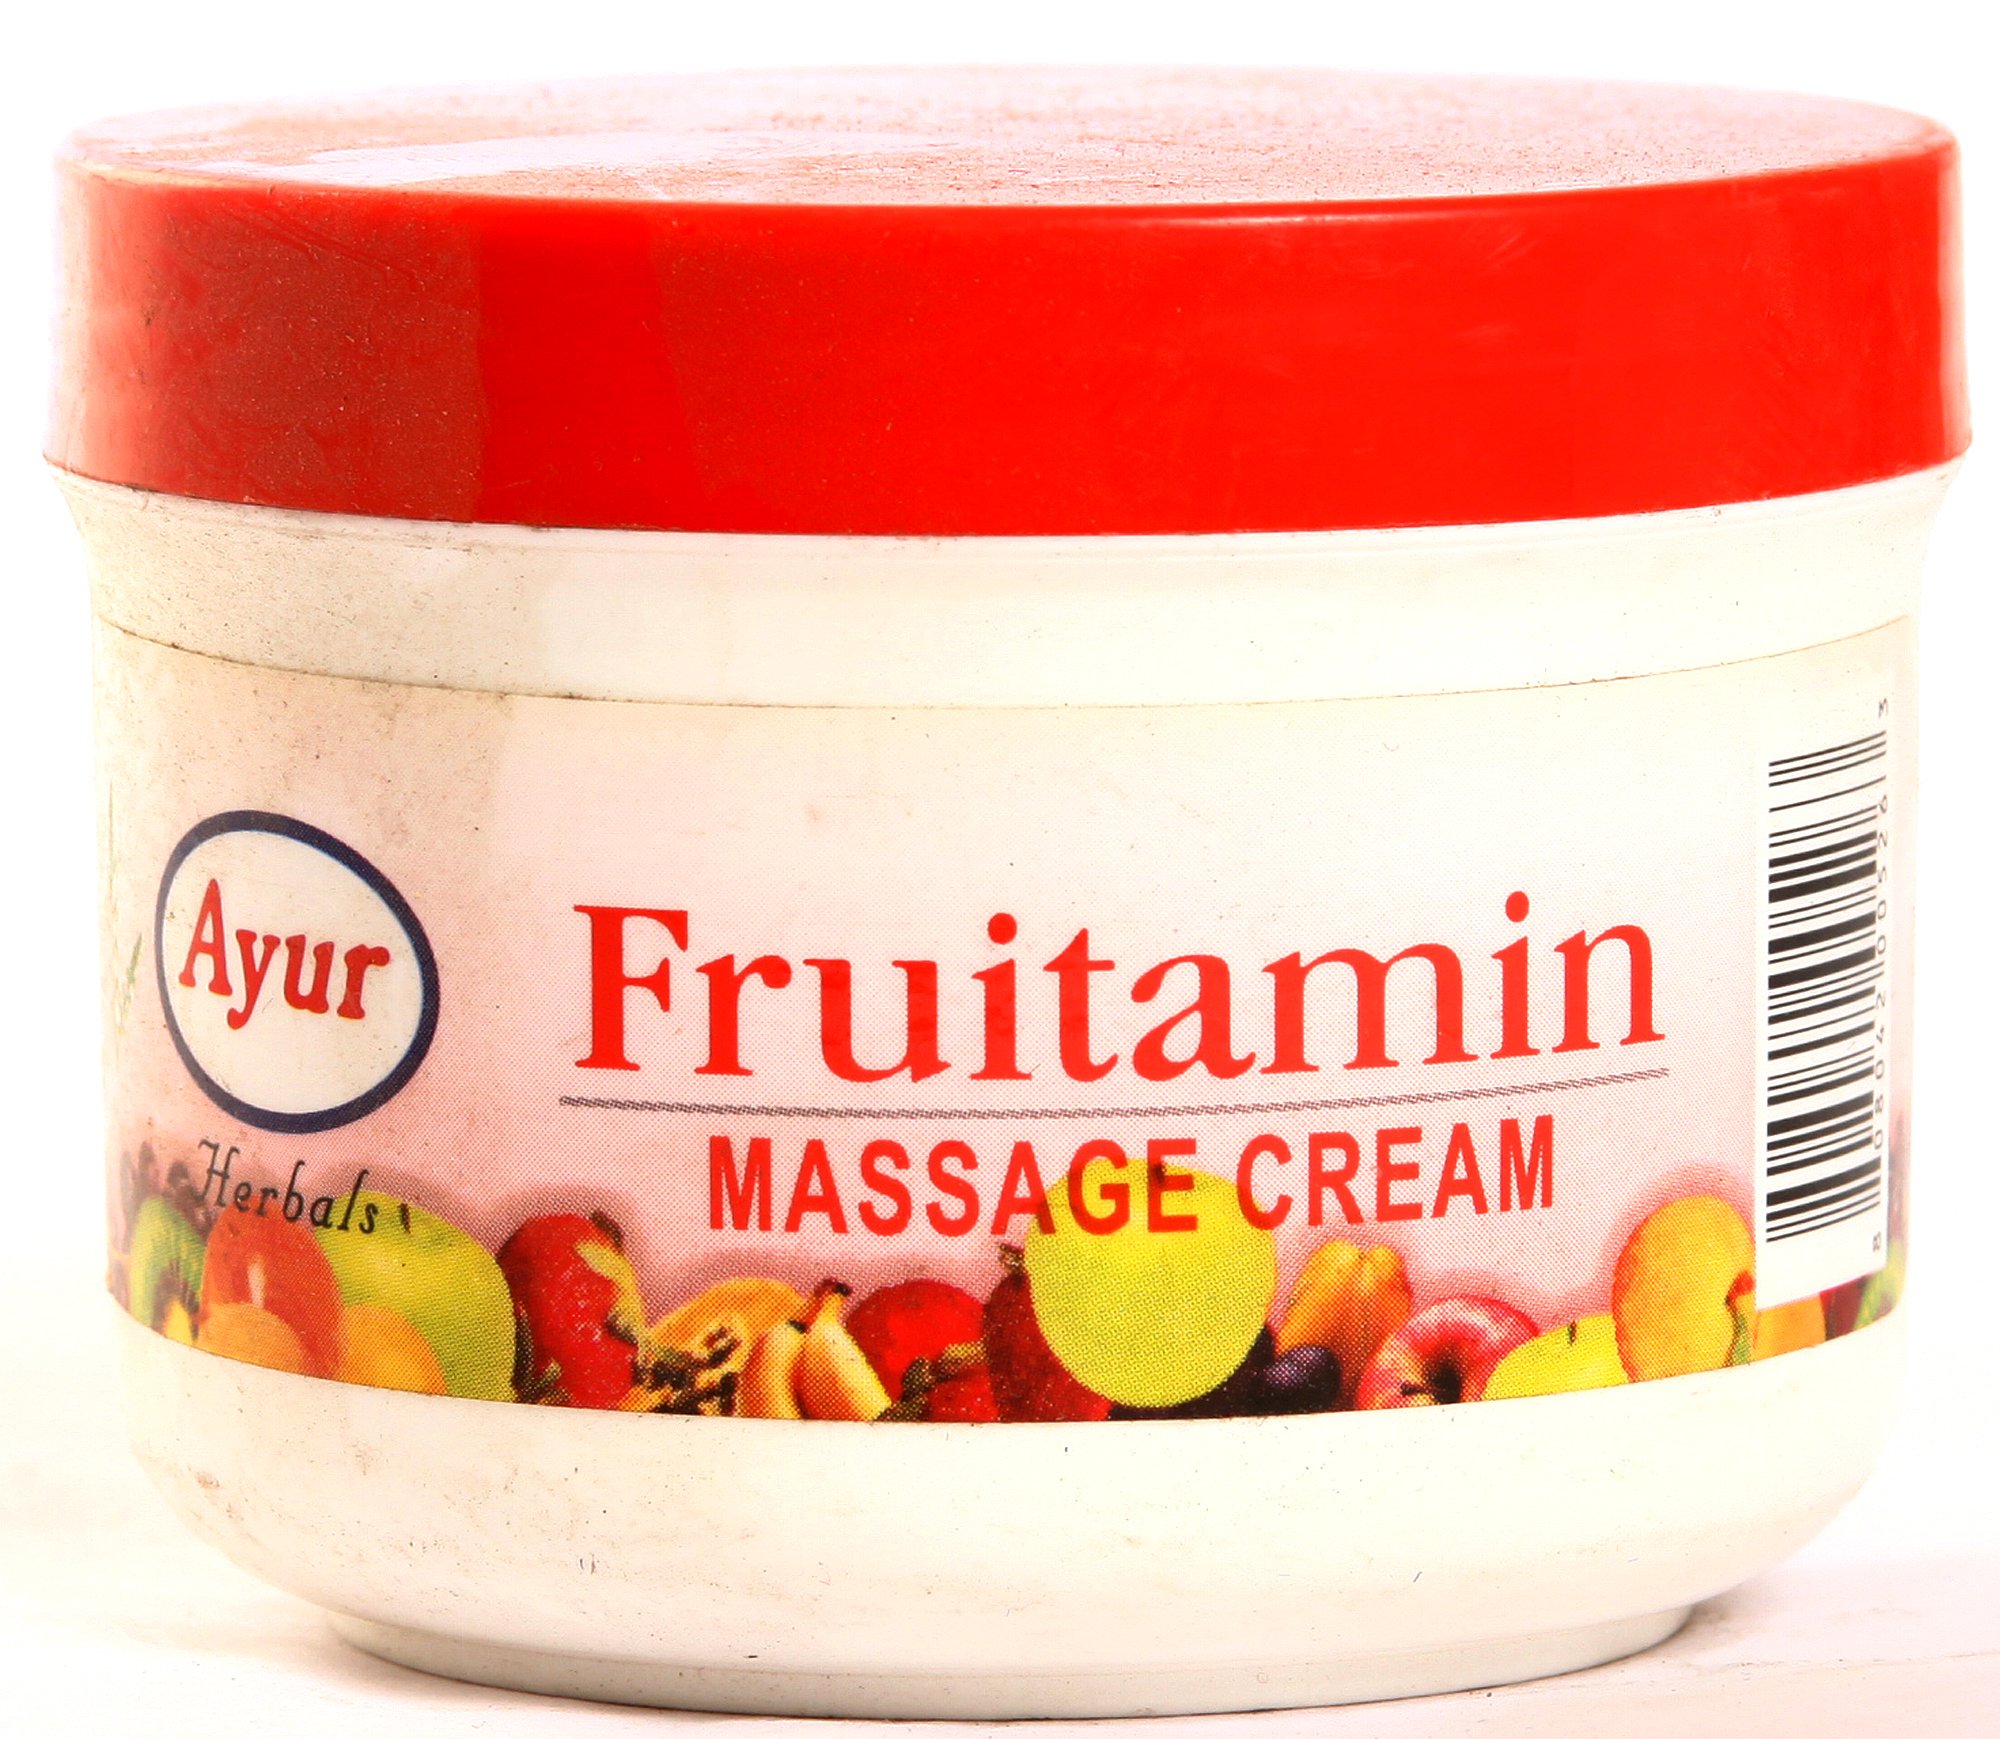 Ayur Herbals Fruitamin Massage Cream - book cover